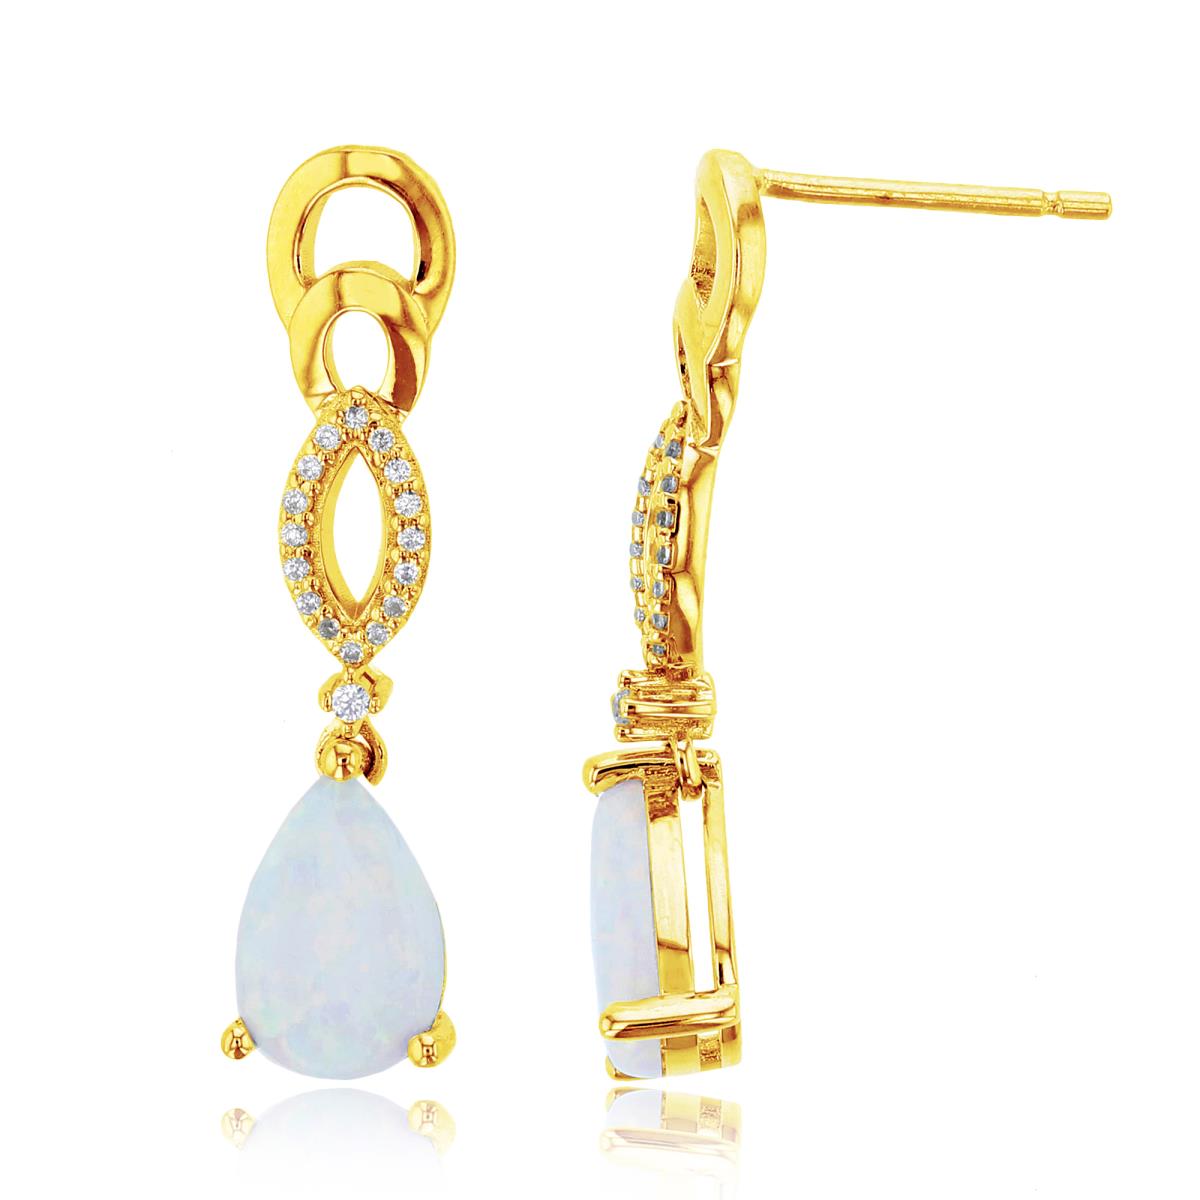 10K Yellow Gold 0.07 CTTW Rnd Diamonds & 9X6mm PS Opal Dangling Earring